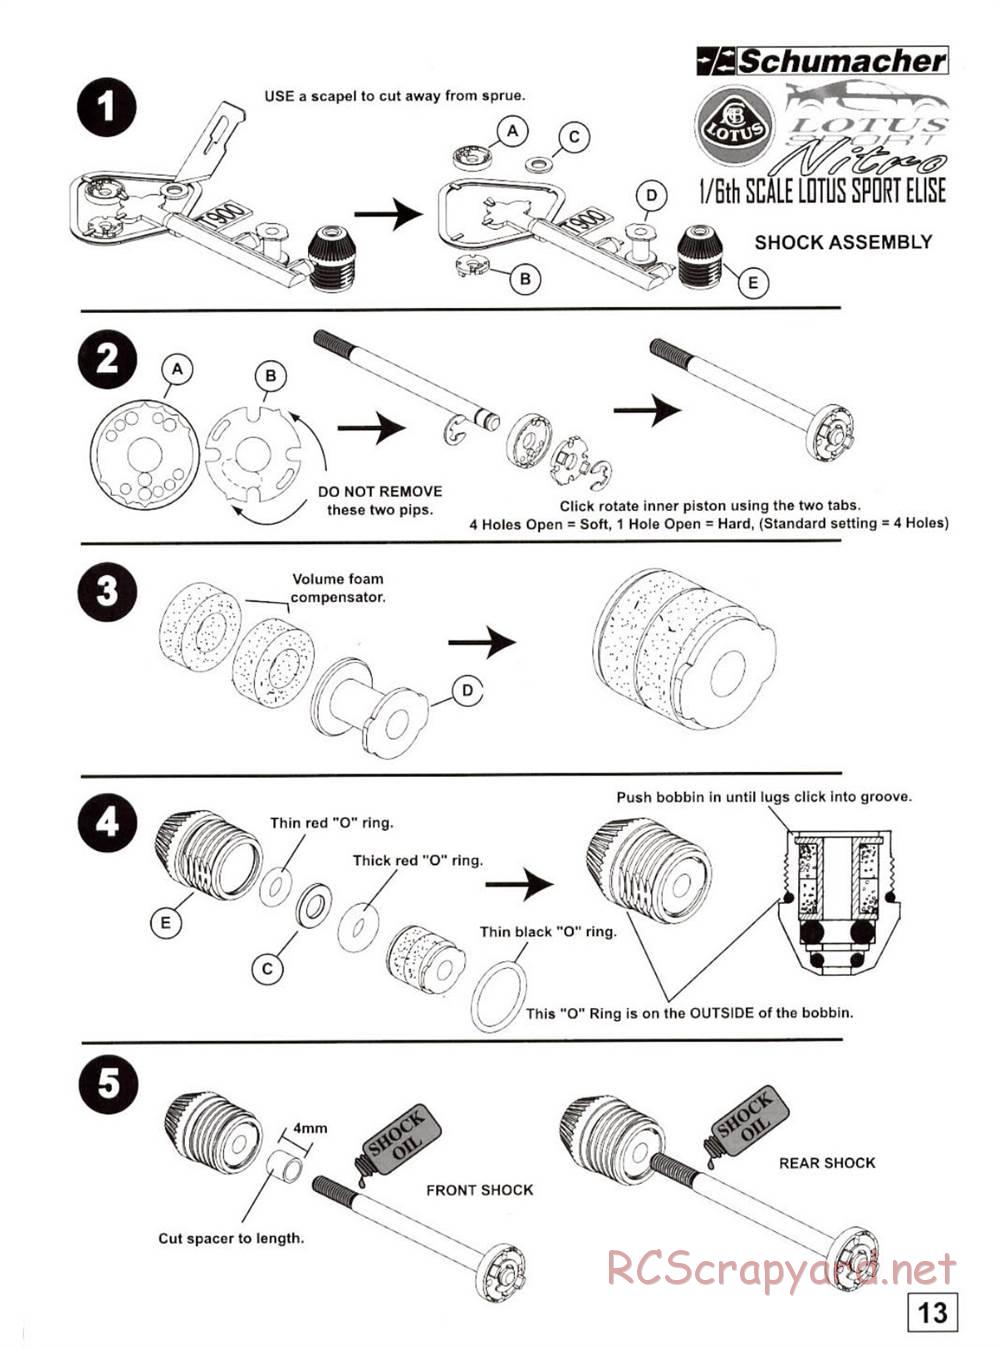 Schumacher - Big 6 Lotus Nitro - Manual - Page 7